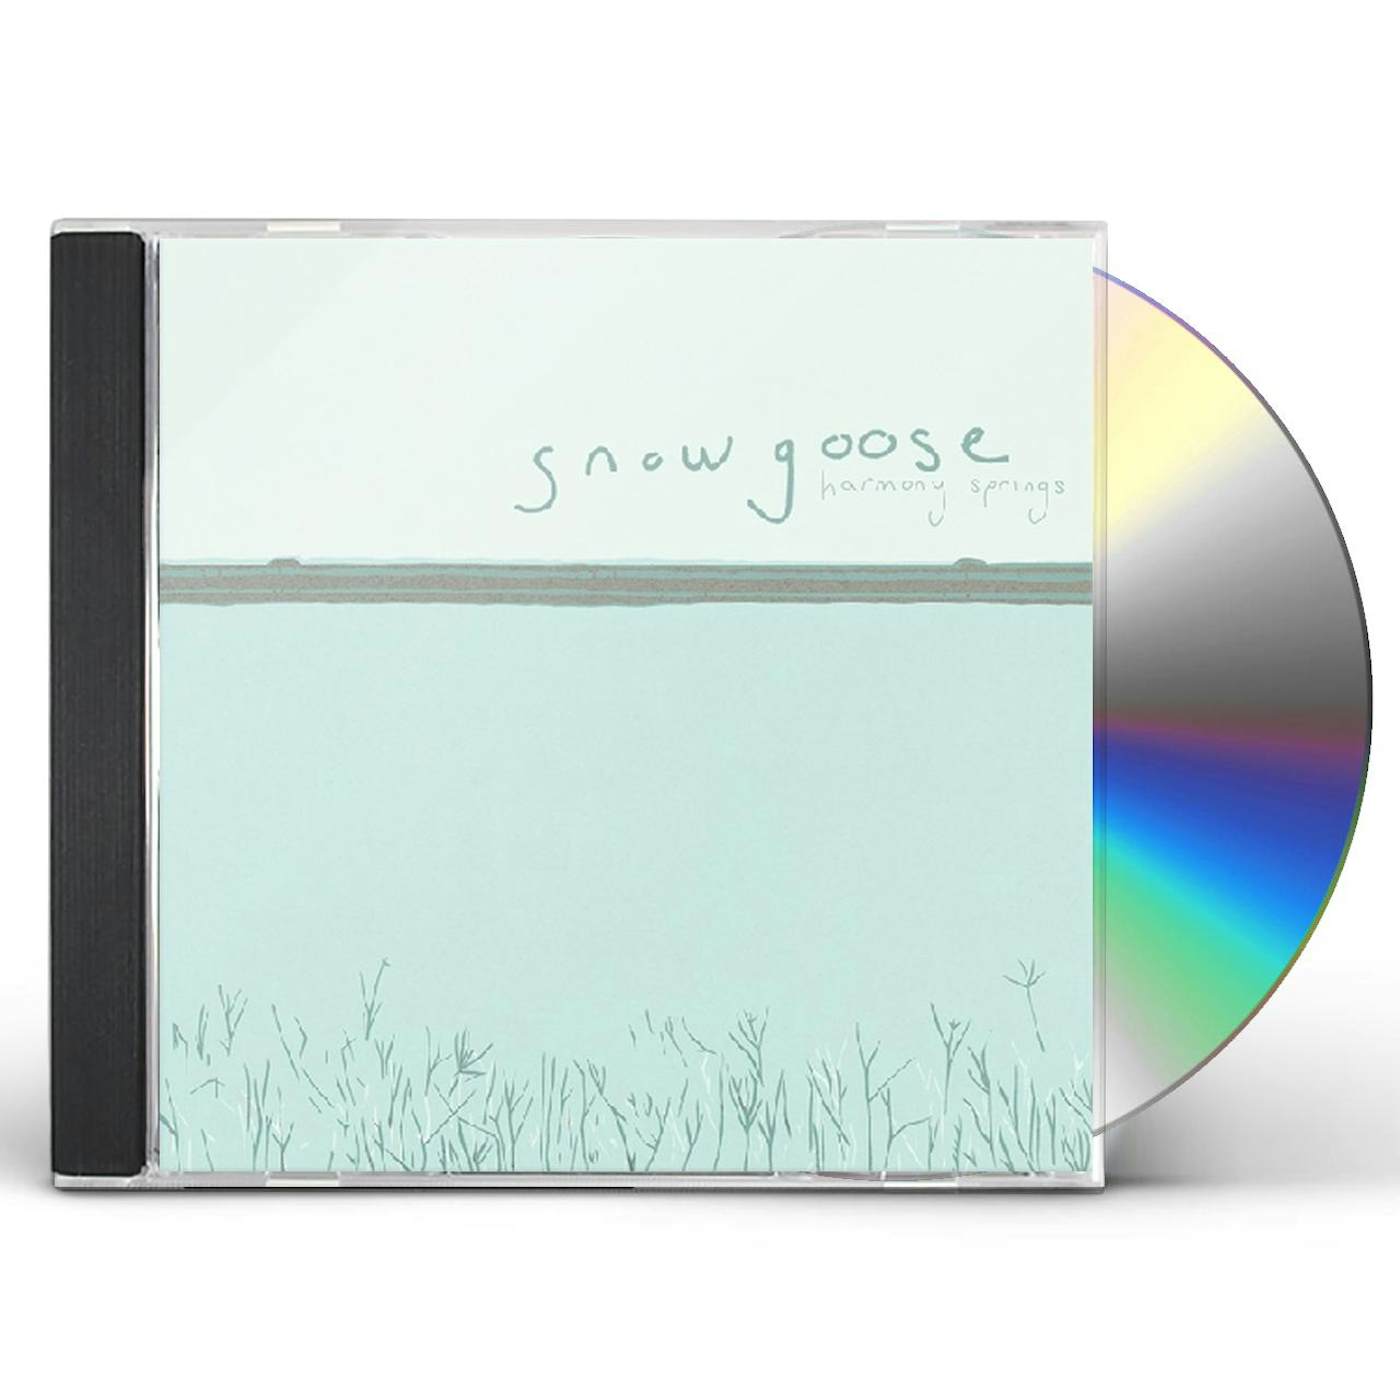 Snowgoose HARMONY SPRINGS CD